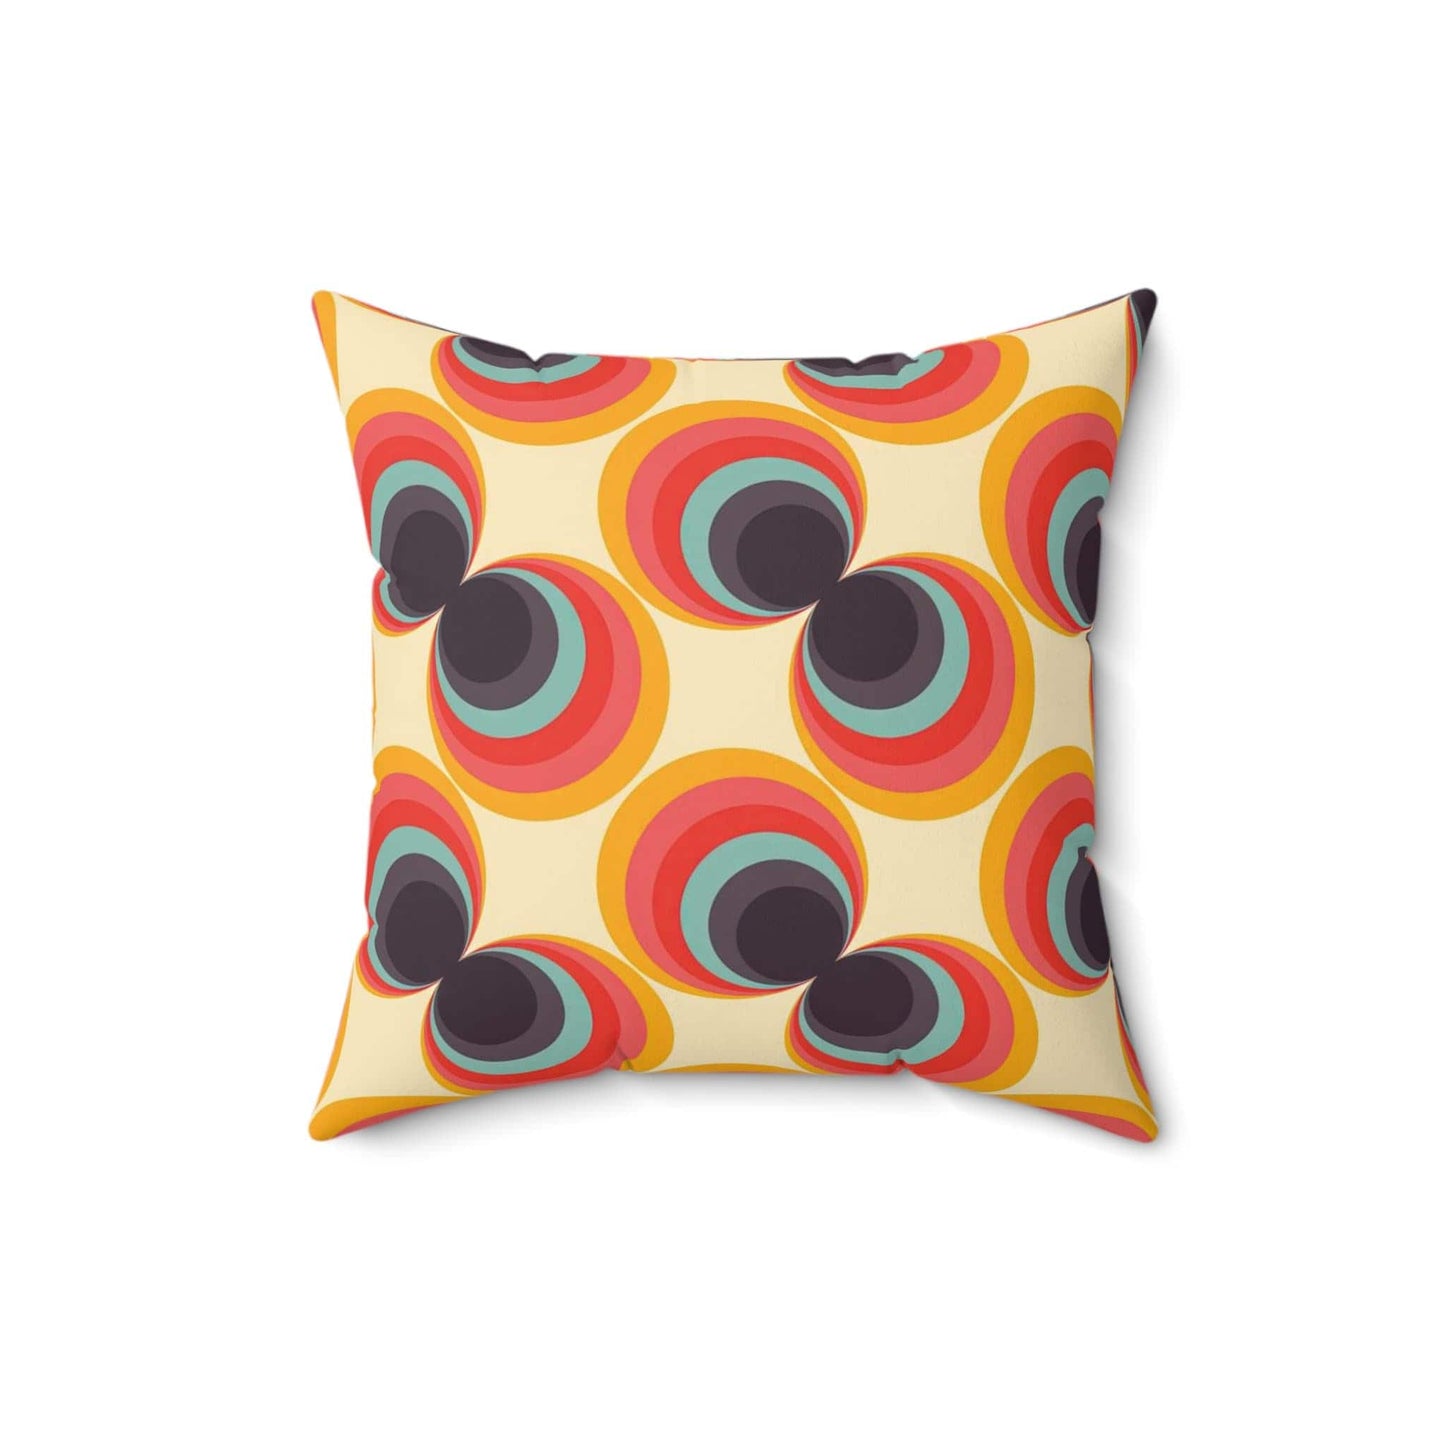 Kate McEnroe New York Mid Century Modern 70s Retro Throw Pillow, MCM Geometric Floral Orb Teal, Orange, Mustard Yellow, Beige Accent Pillow - 131082623 Throw Pillows